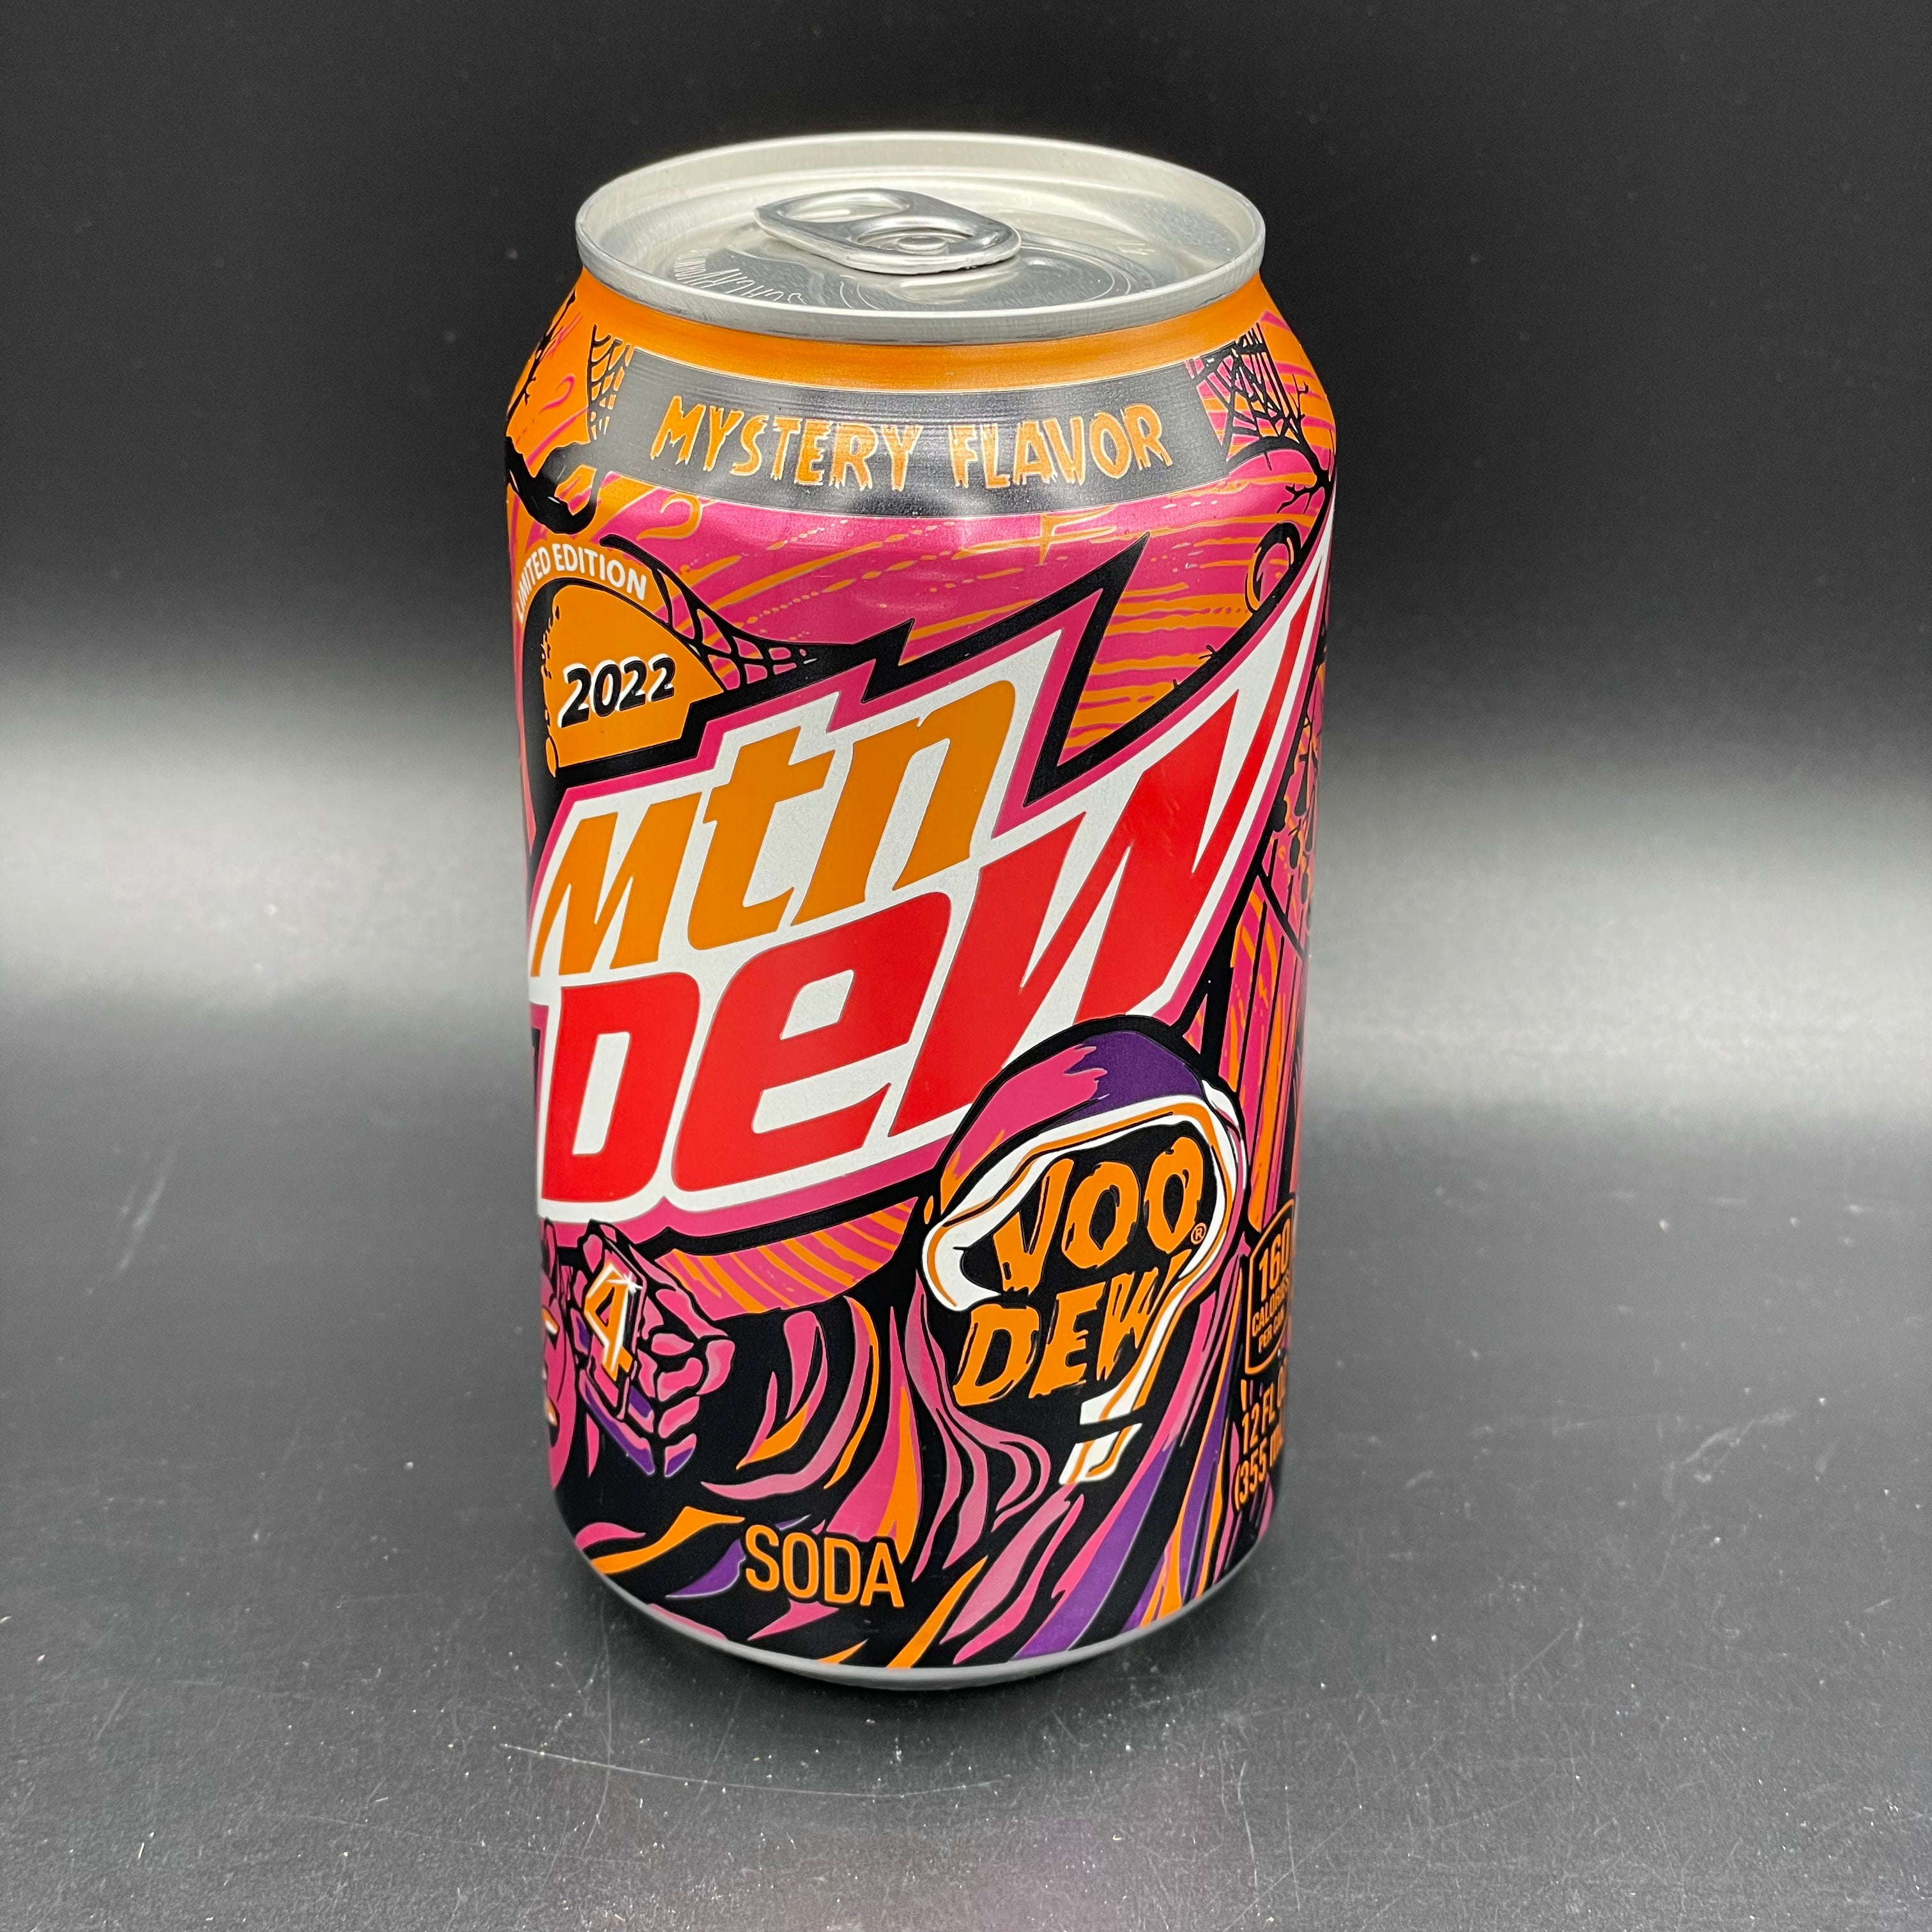 NEW 2022 MTN Dew Voo Dew (Mountain Dew) Mystery Flavour 355ml (USA)